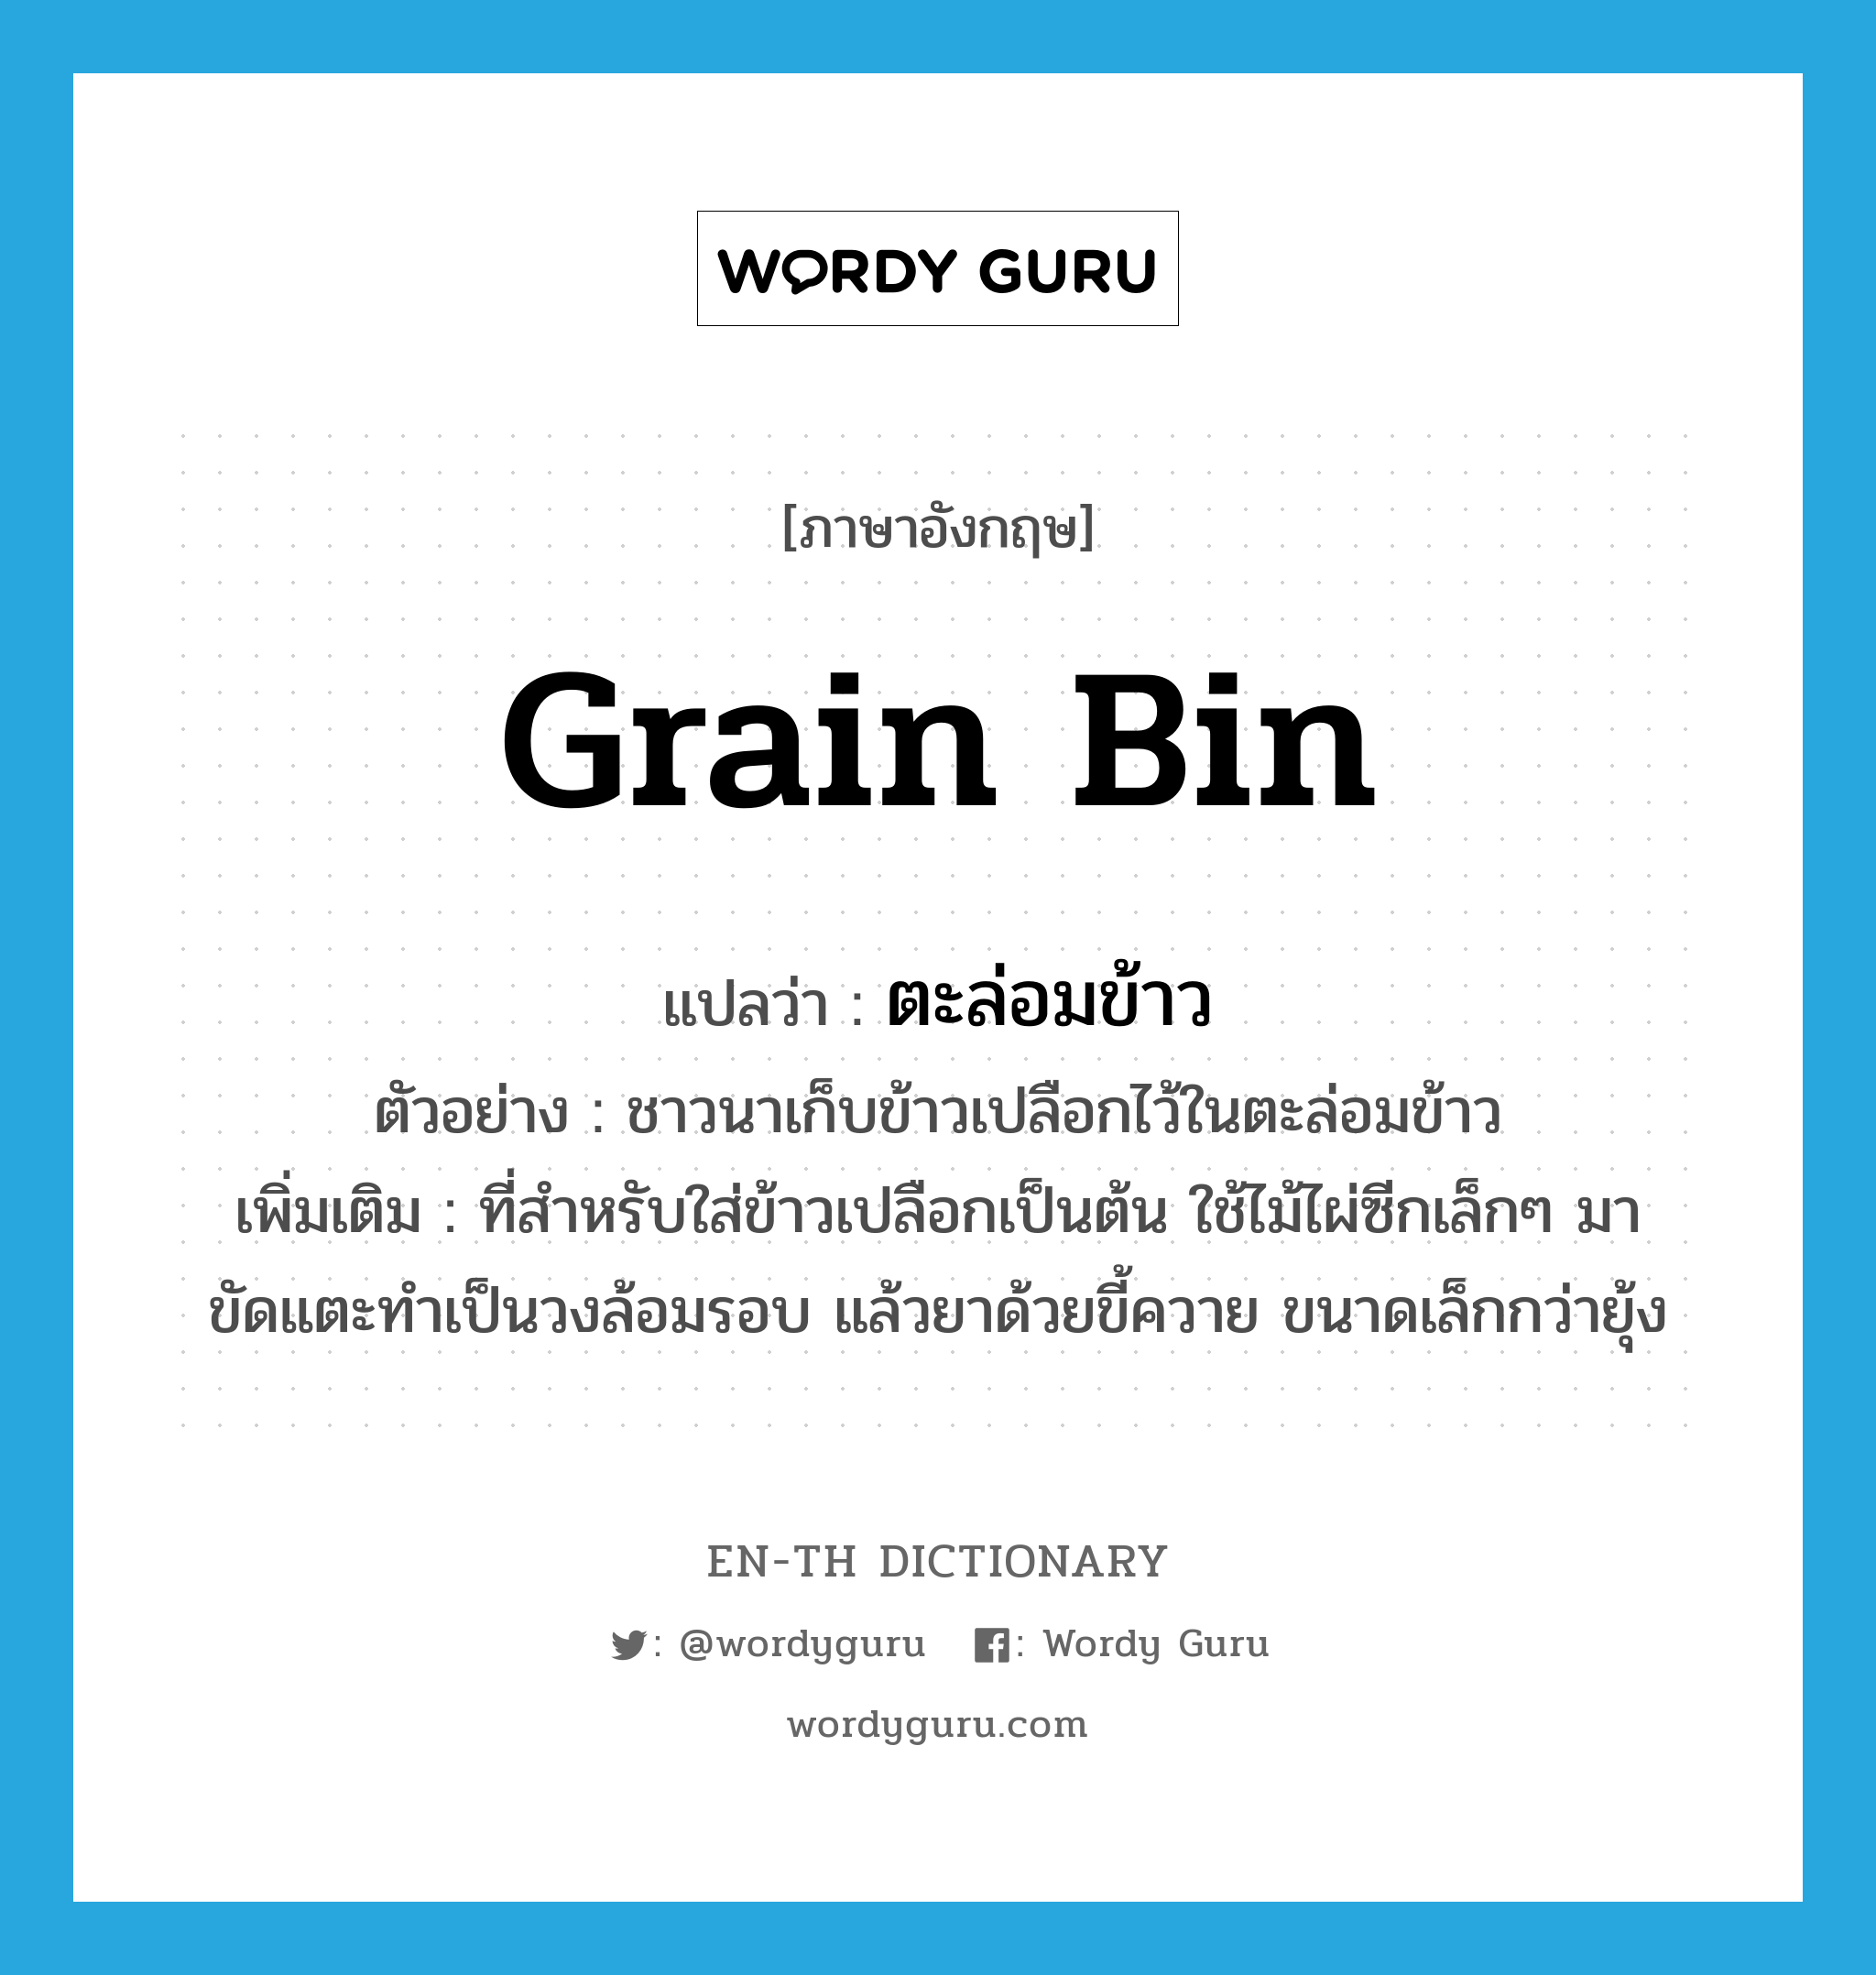 grain bin แปลว่า?, คำศัพท์ภาษาอังกฤษ grain bin แปลว่า ตะล่อมข้าว ประเภท N ตัวอย่าง ชาวนาเก็บข้าวเปลือกไว้ในตะล่อมข้าว เพิ่มเติม ที่สำหรับใส่ข้าวเปลือกเป็นต้น ใช้ไม้ไผ่ซีกเล็กๆ มาขัดแตะทำเป็นวงล้อมรอบ แล้วยาด้วยขี้ควาย ขนาดเล็กกว่ายุ้ง หมวด N